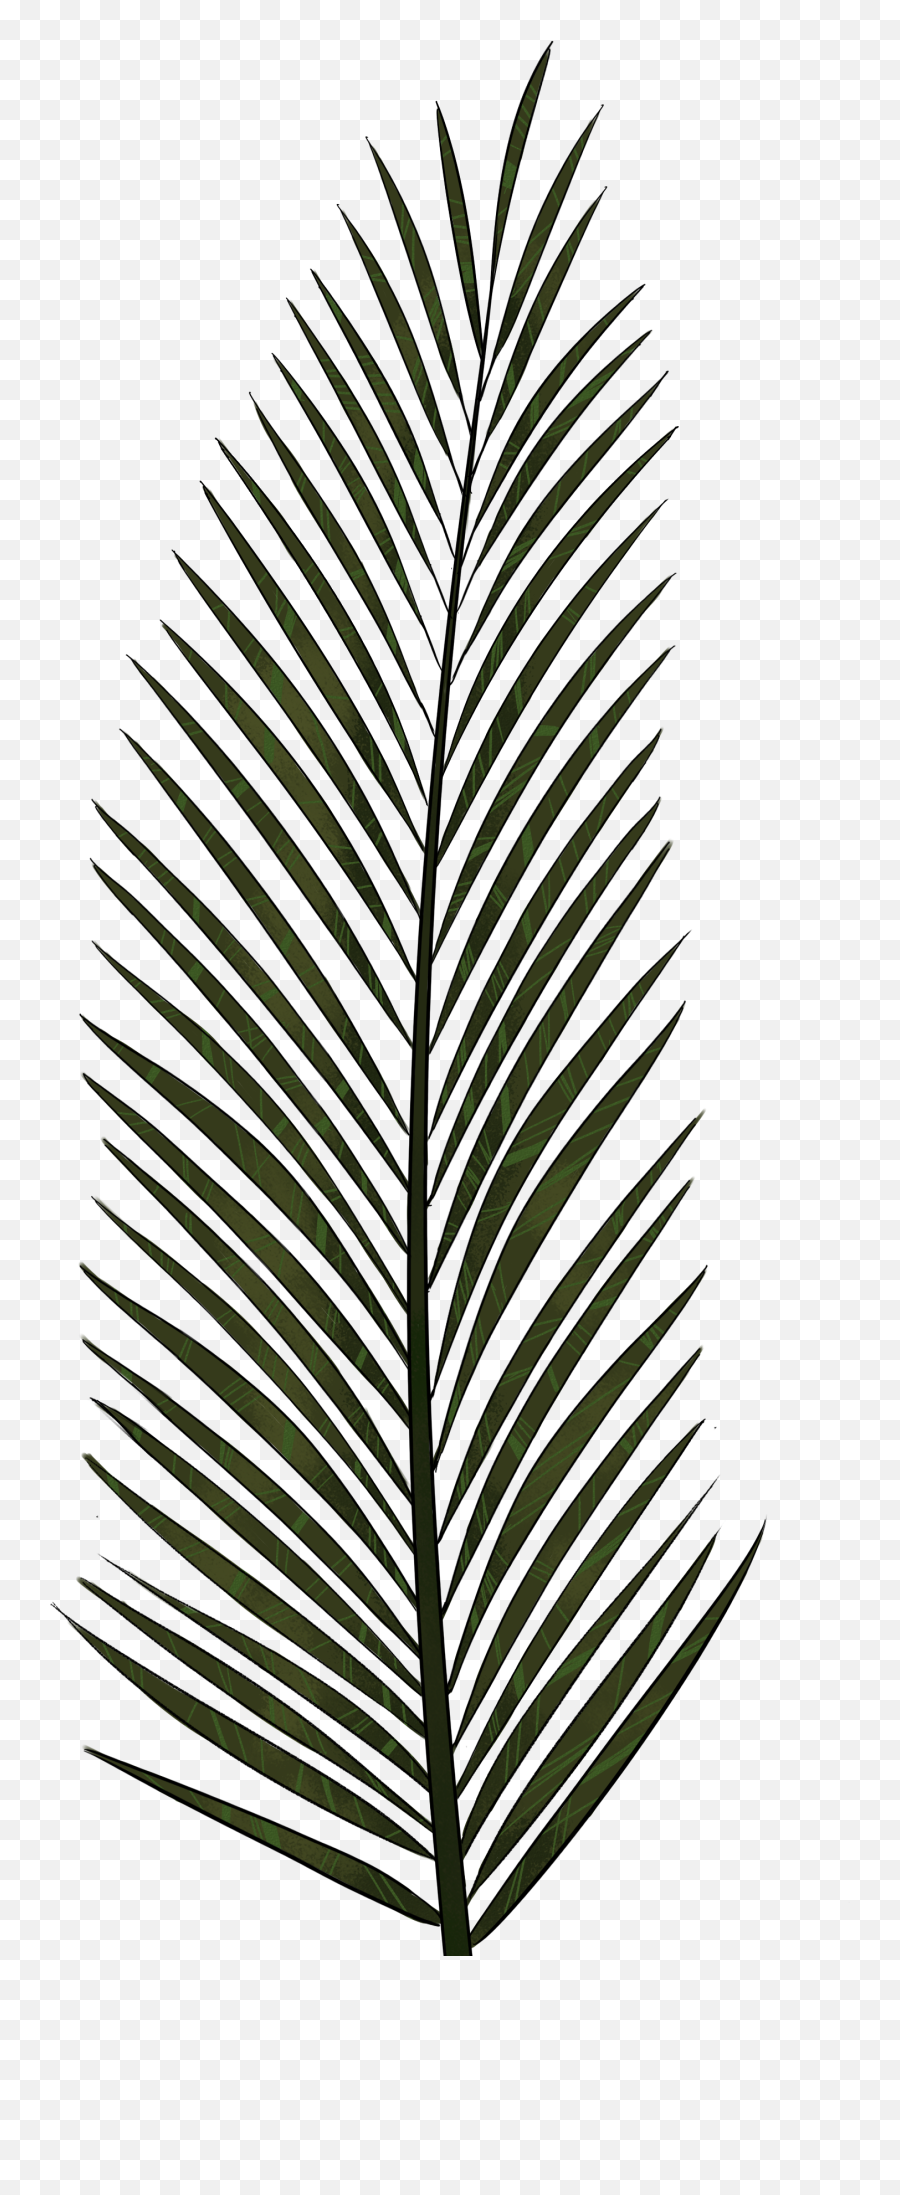 Palm Leaves - Palm Tree Leaf Texture Clipart Full Size Transparent Palm Tree Leaf Emoji,Palm Tree Emoji